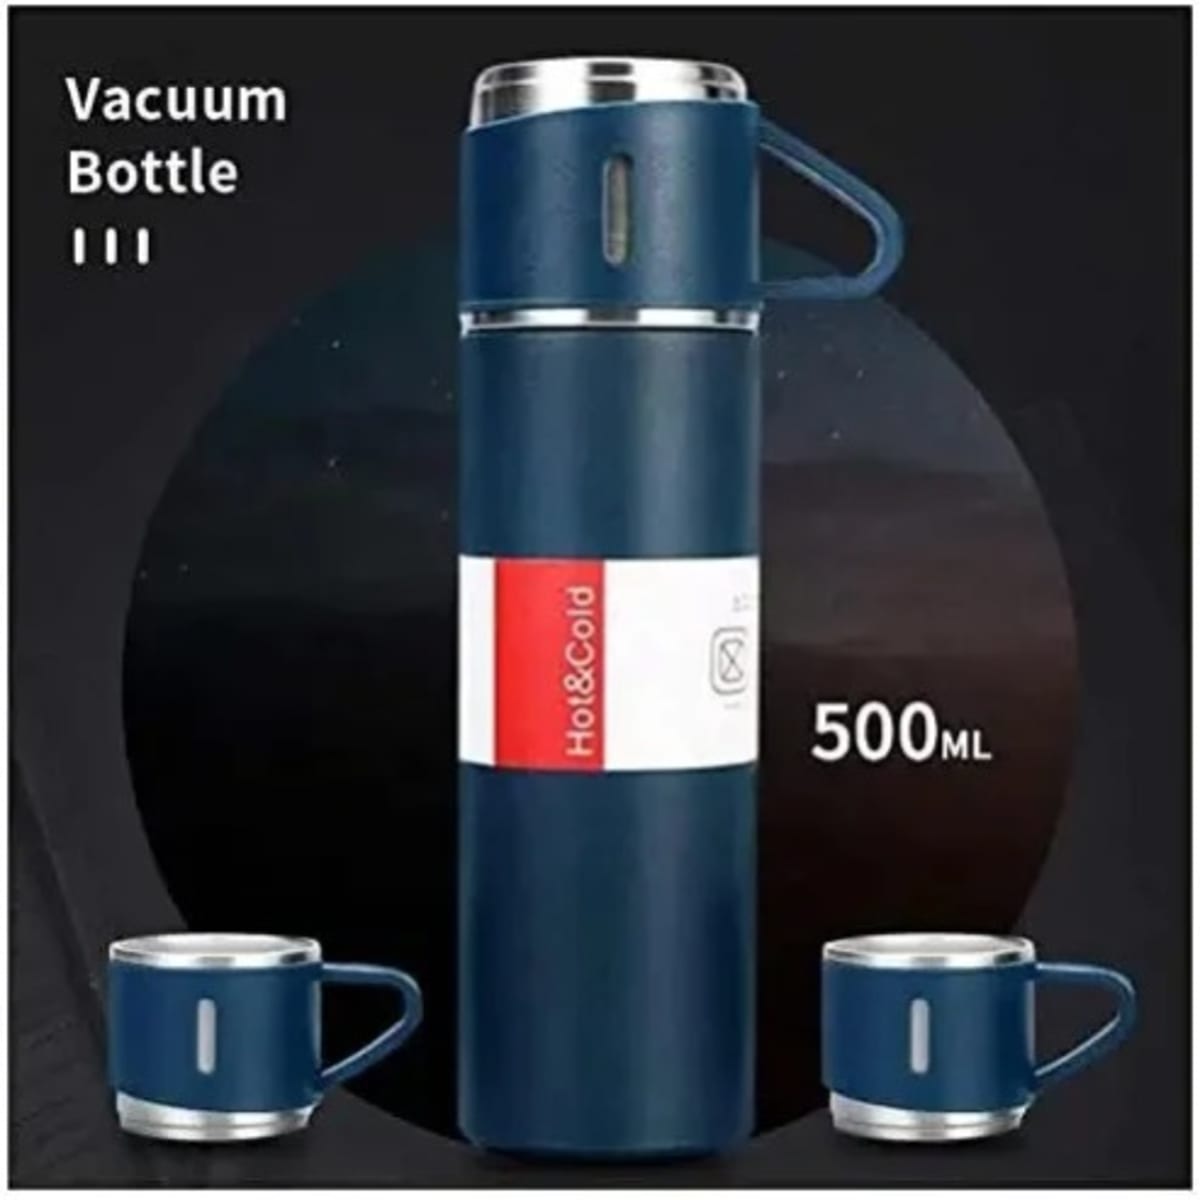 Steel Vacuum Flask Set With 3 Steel Cups - 500ml